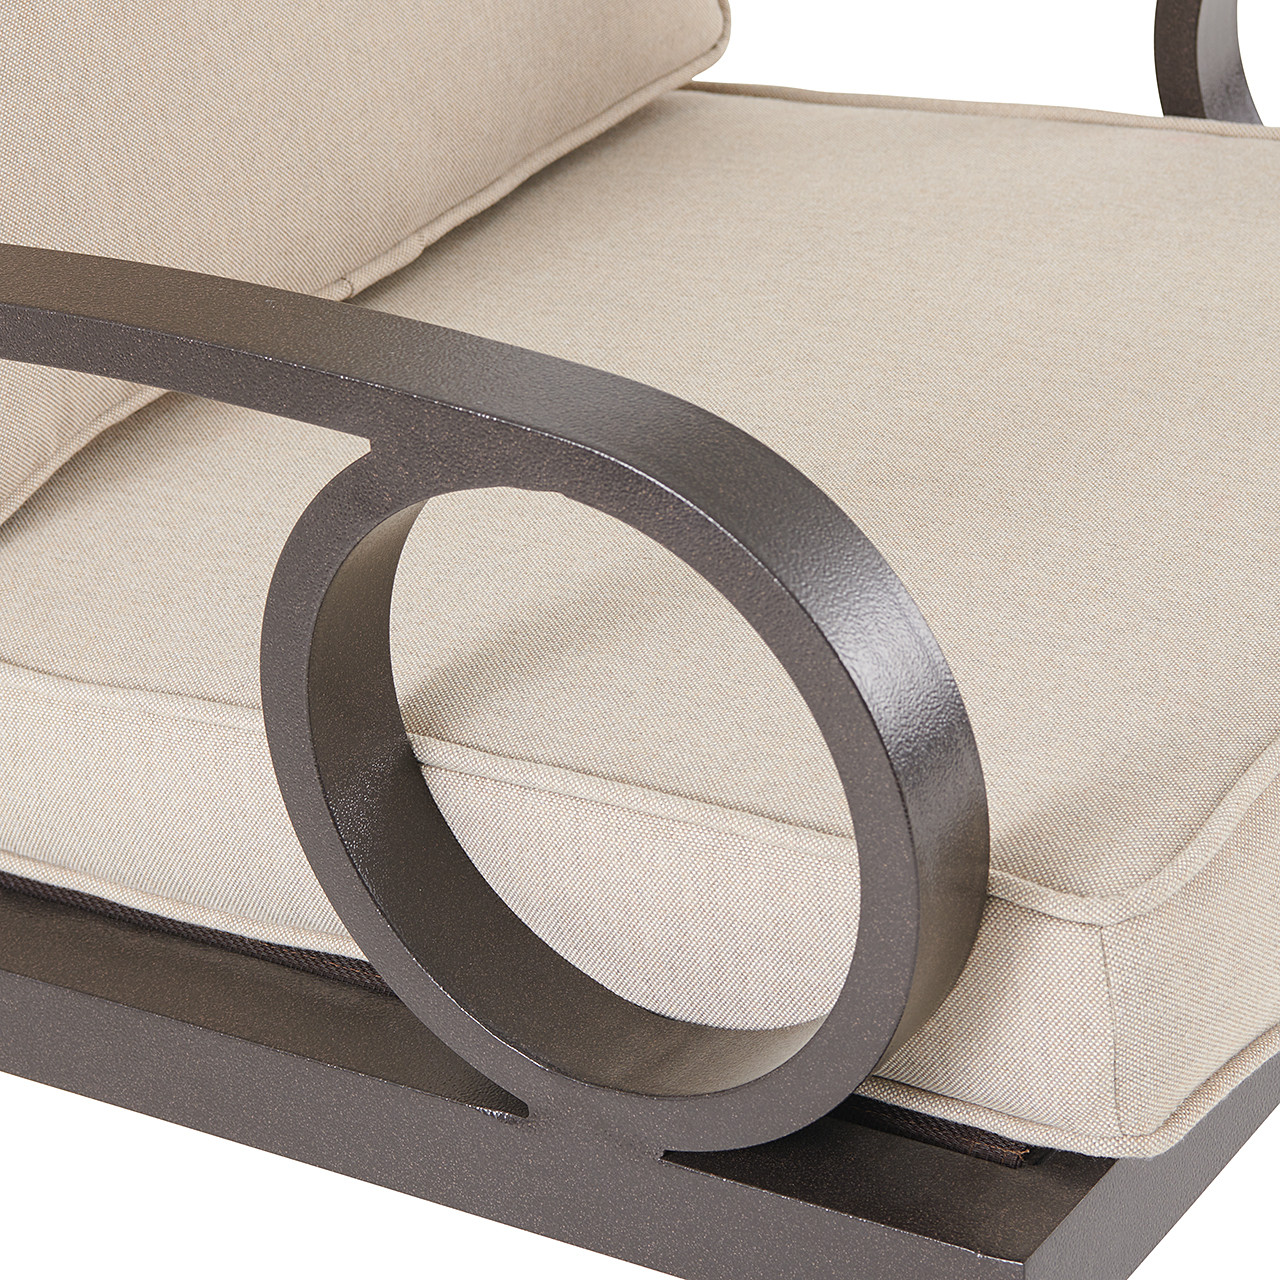 Ravello Scoria Aluminum with Cushions Dining Chair